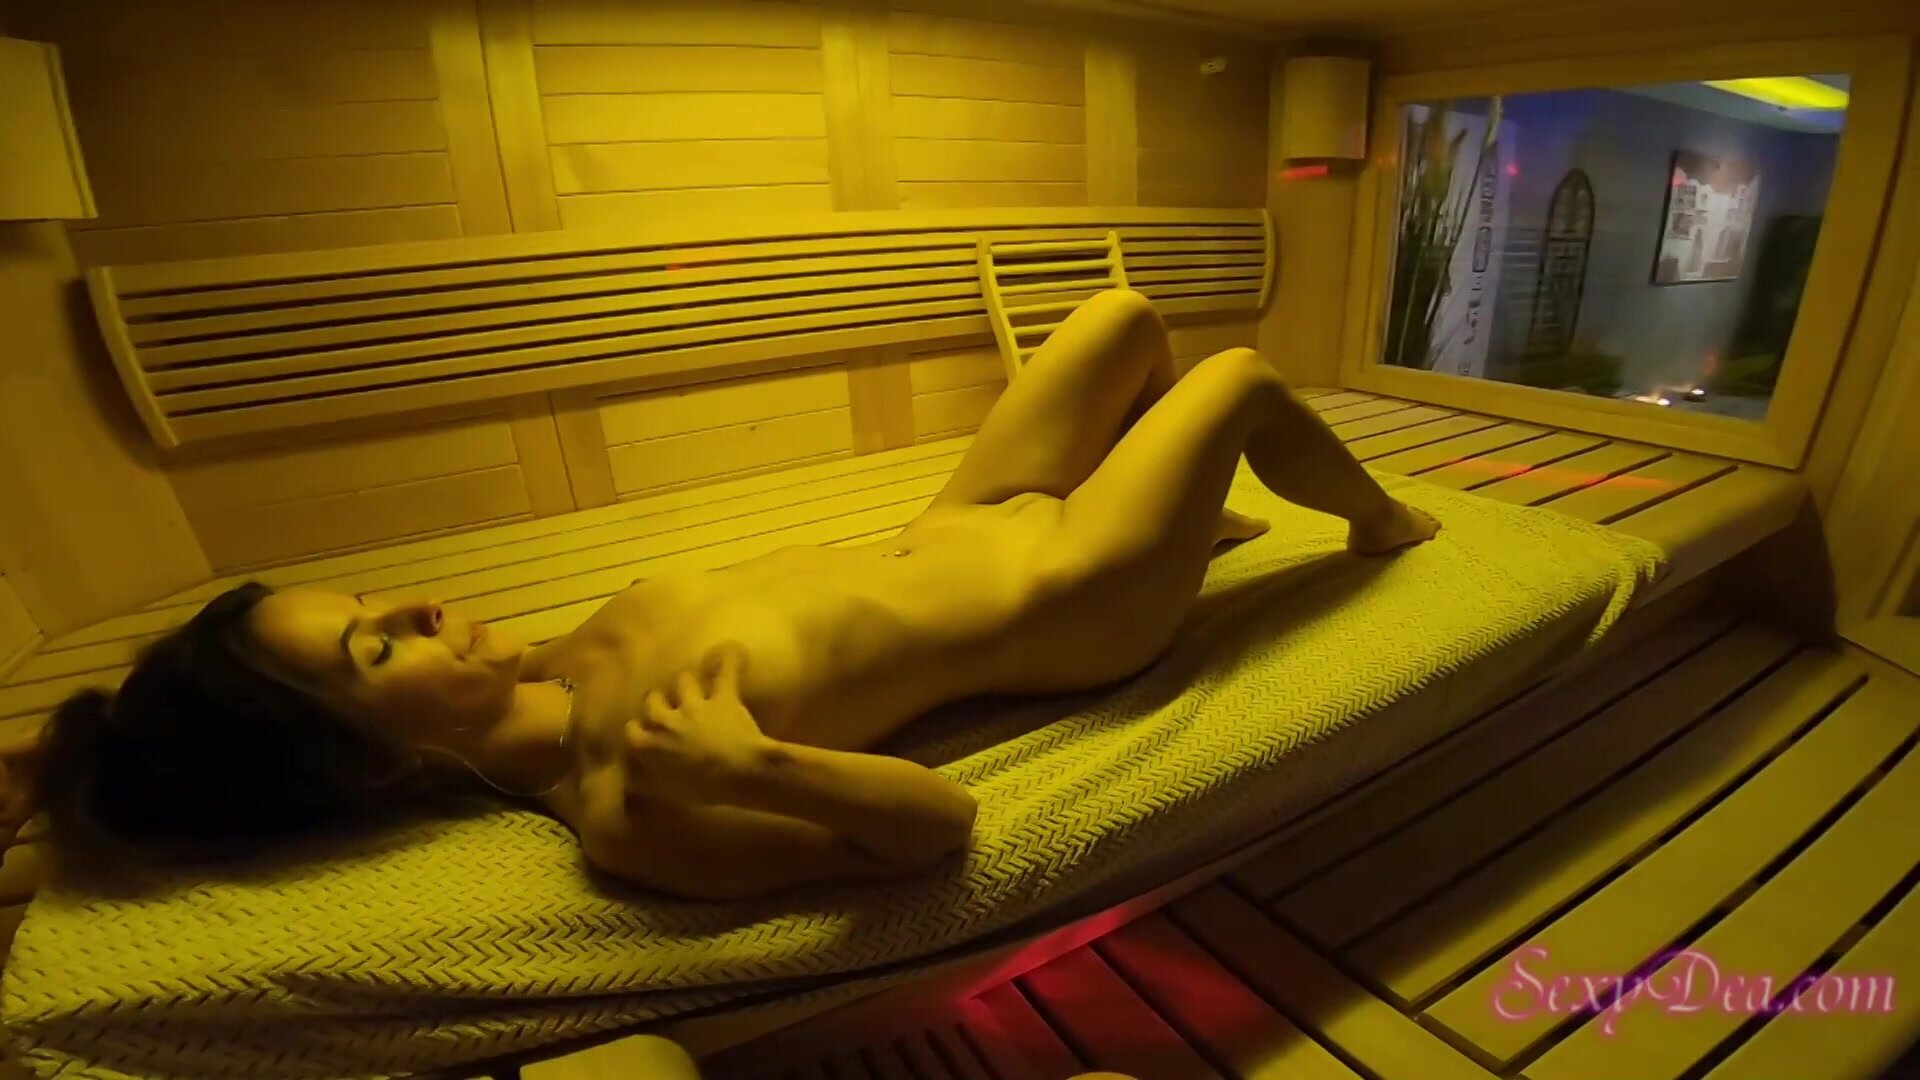 SexyDea - Sauna Gets Extra Hot